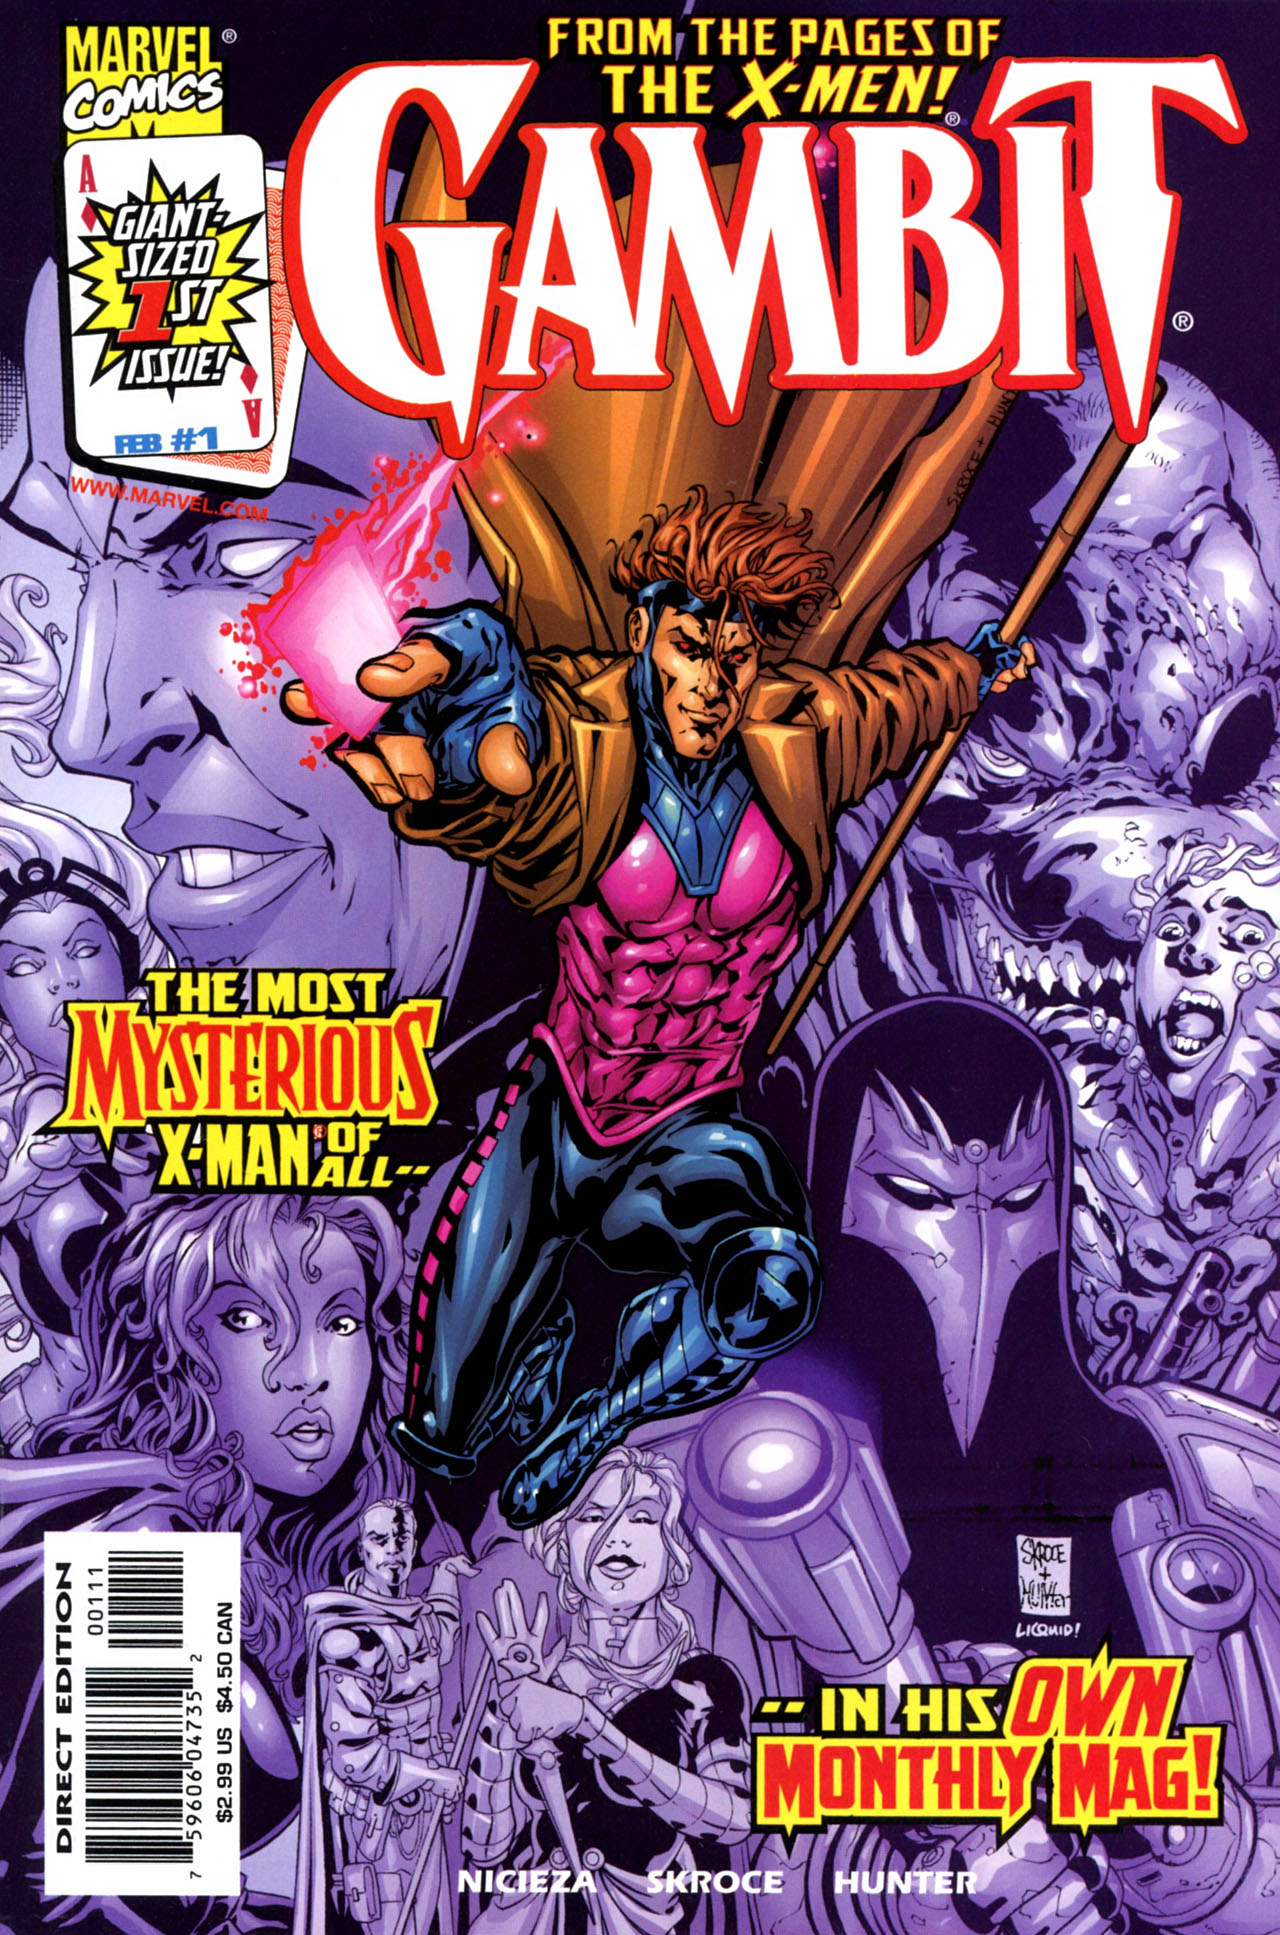 Read Online Gambit Comic Issue